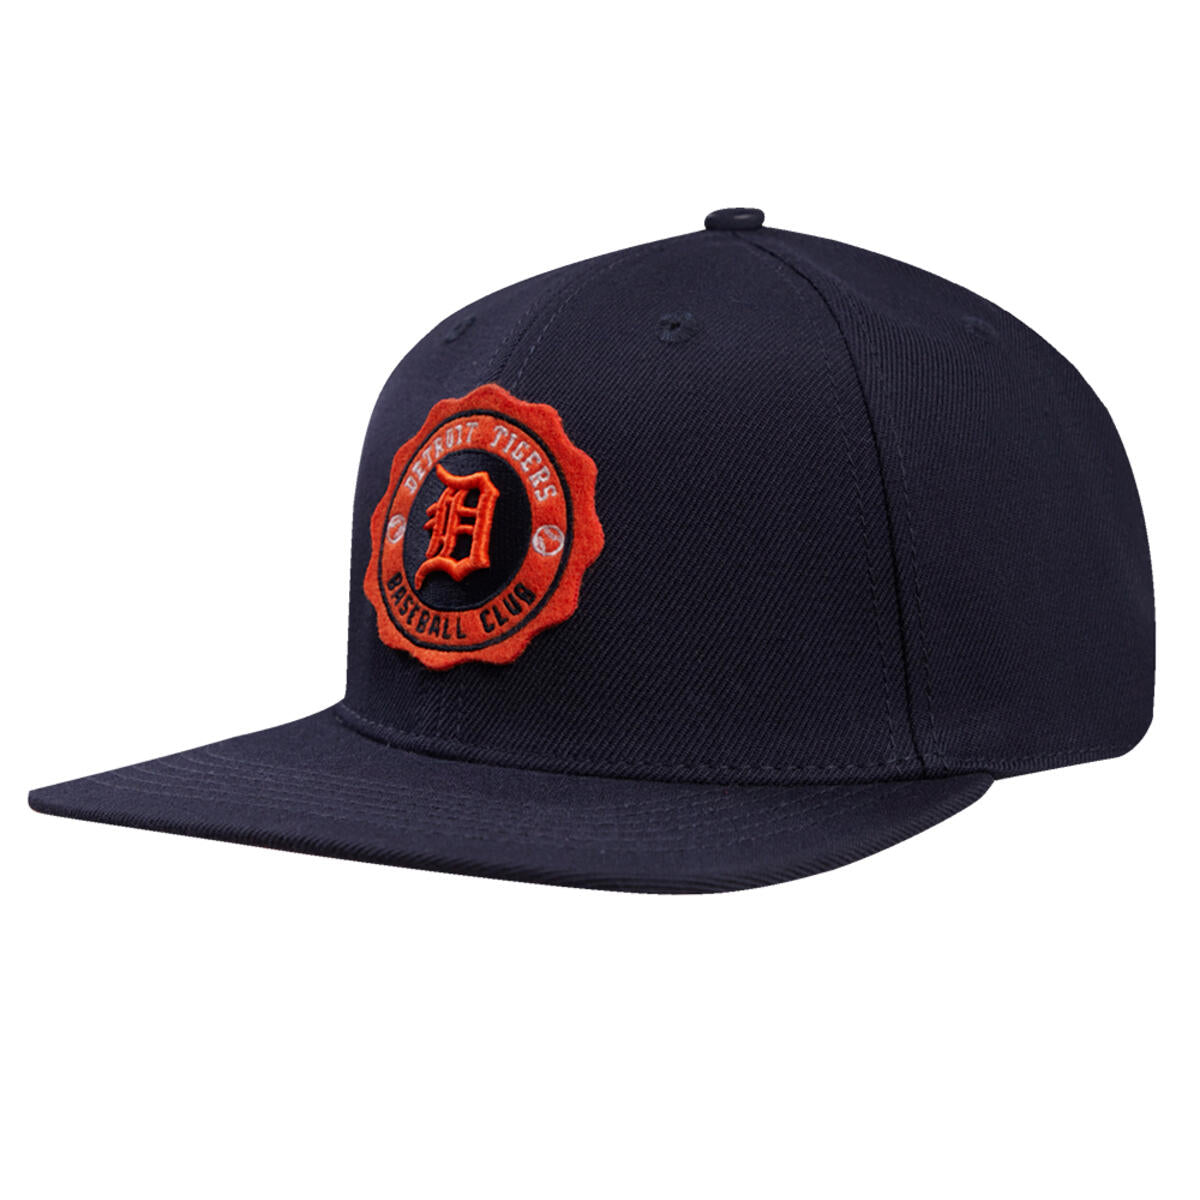 Pro Standard - Detroit Tigers Crest Emblem Wool Snapback Hat - Navy/Orange